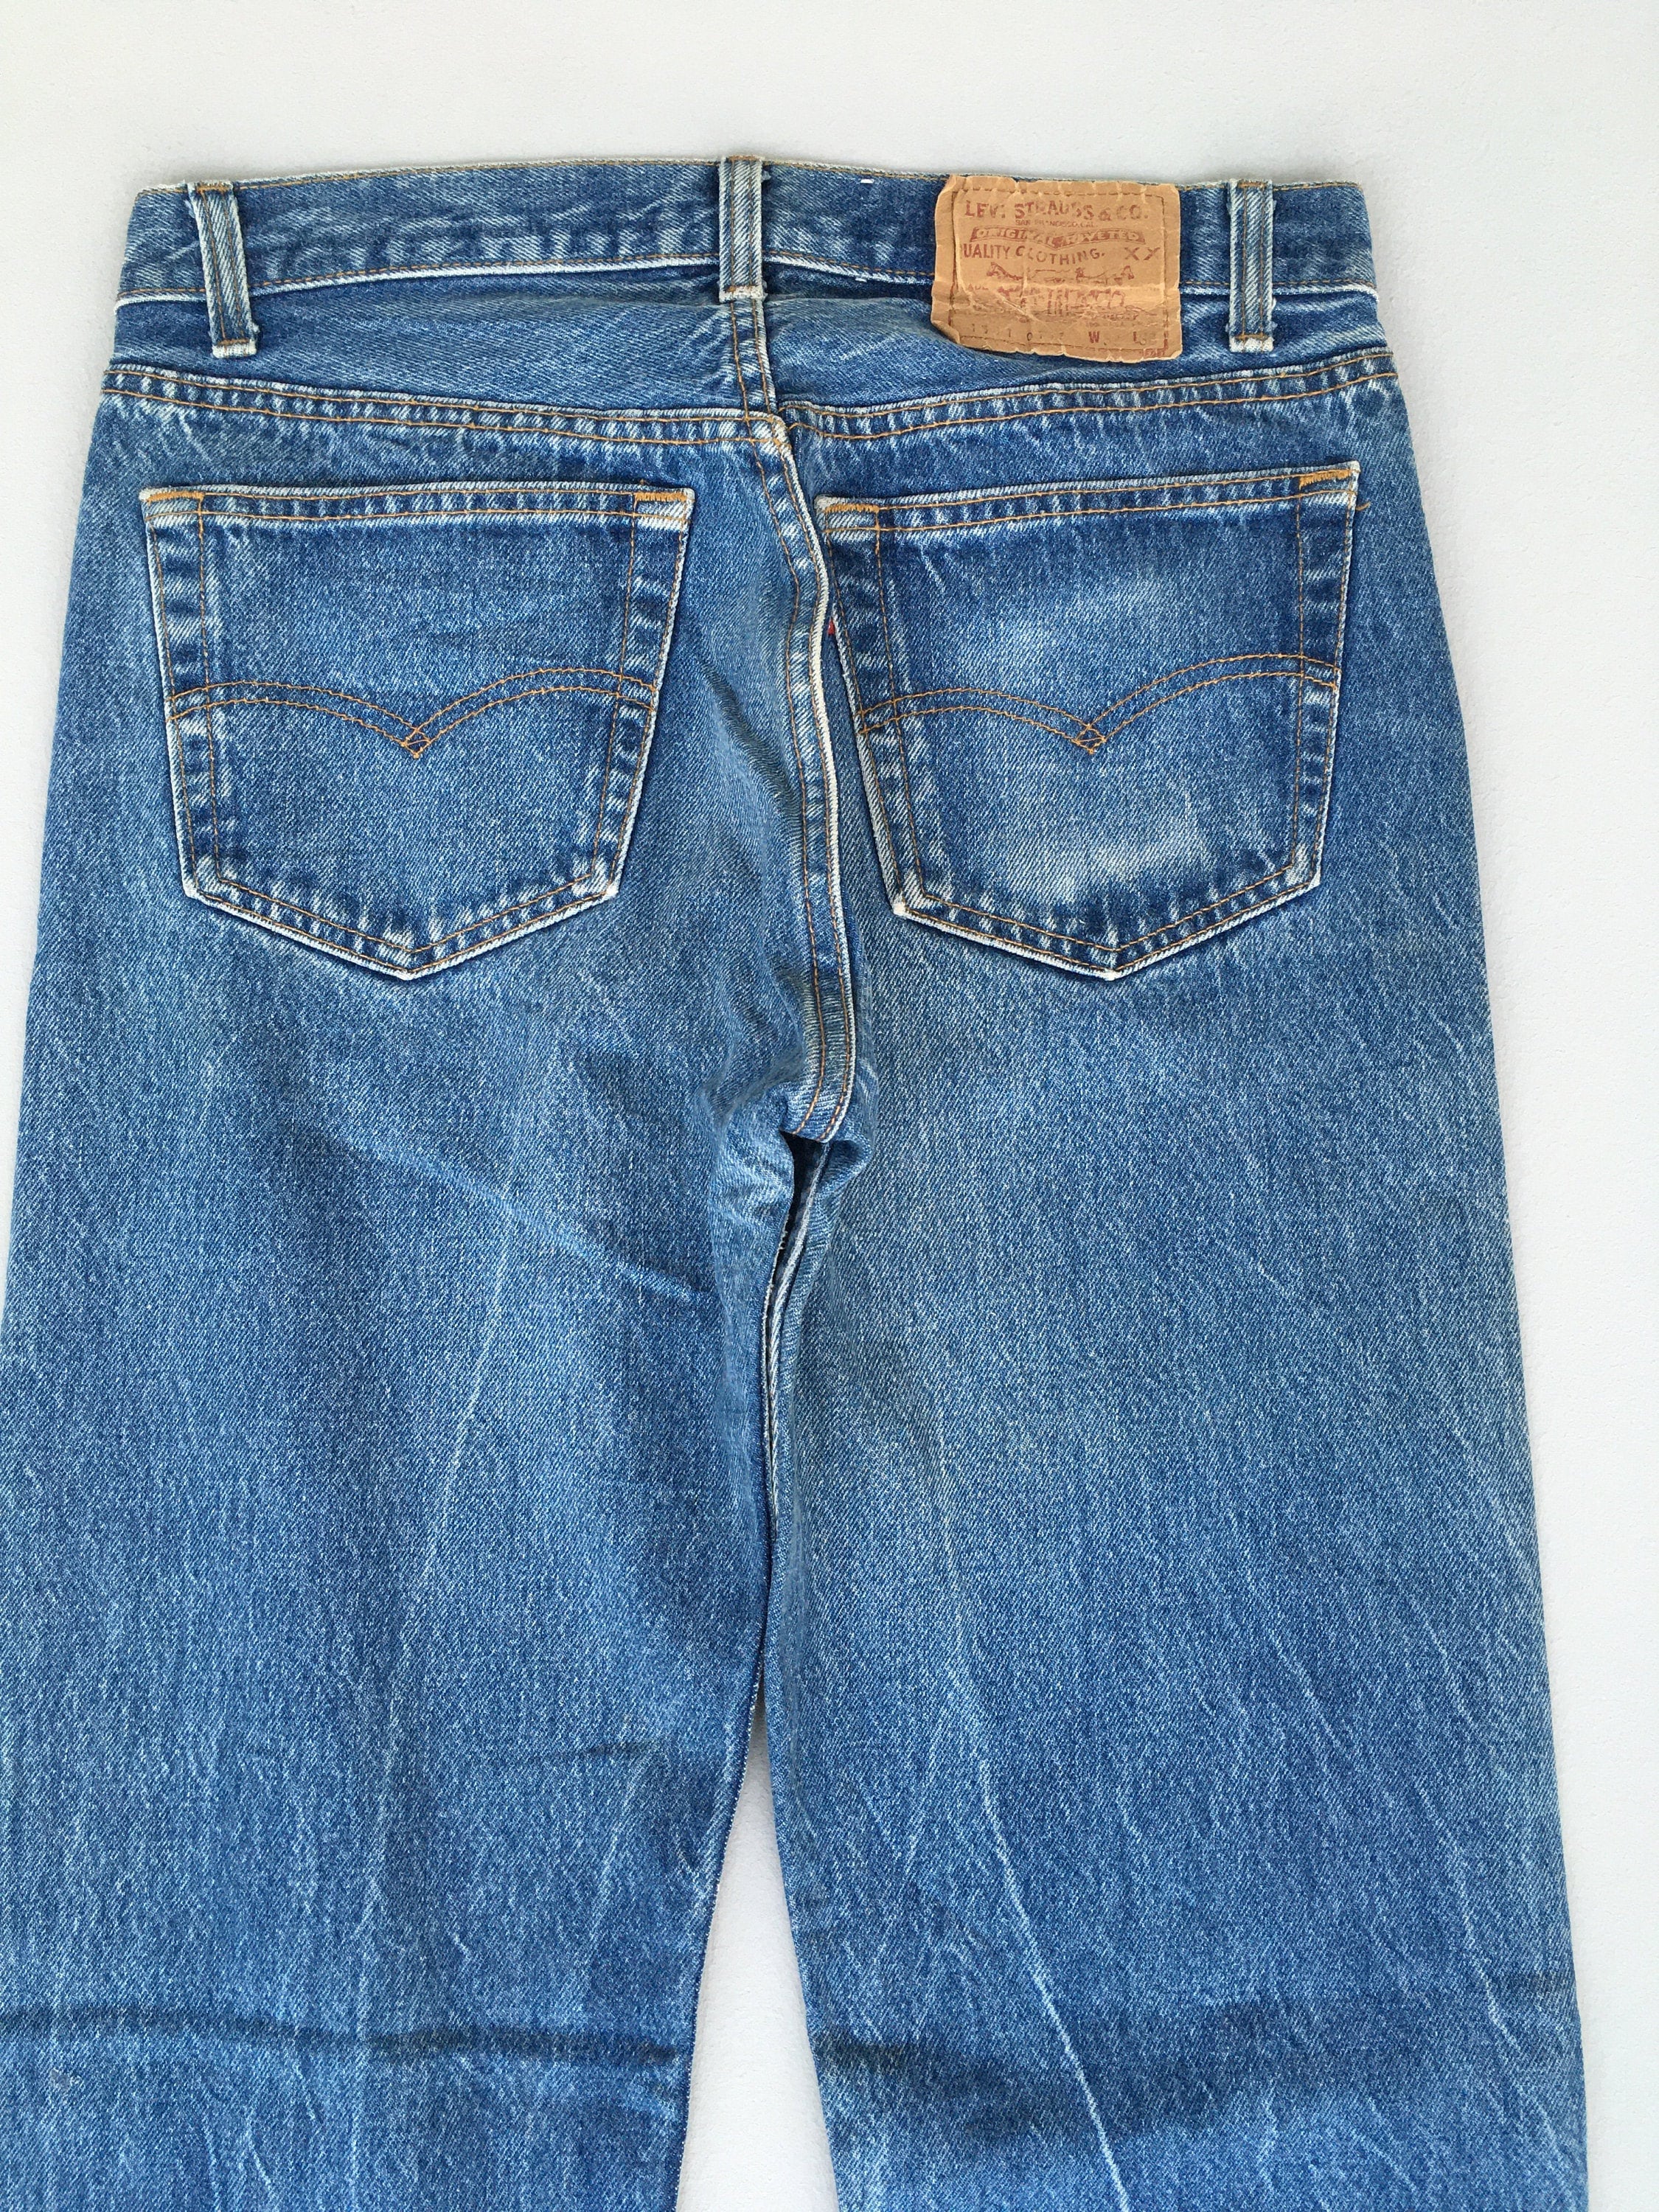 Size 30x33.5 Vintage 90s Levis 501 Women's Jeans - Etsy Israel